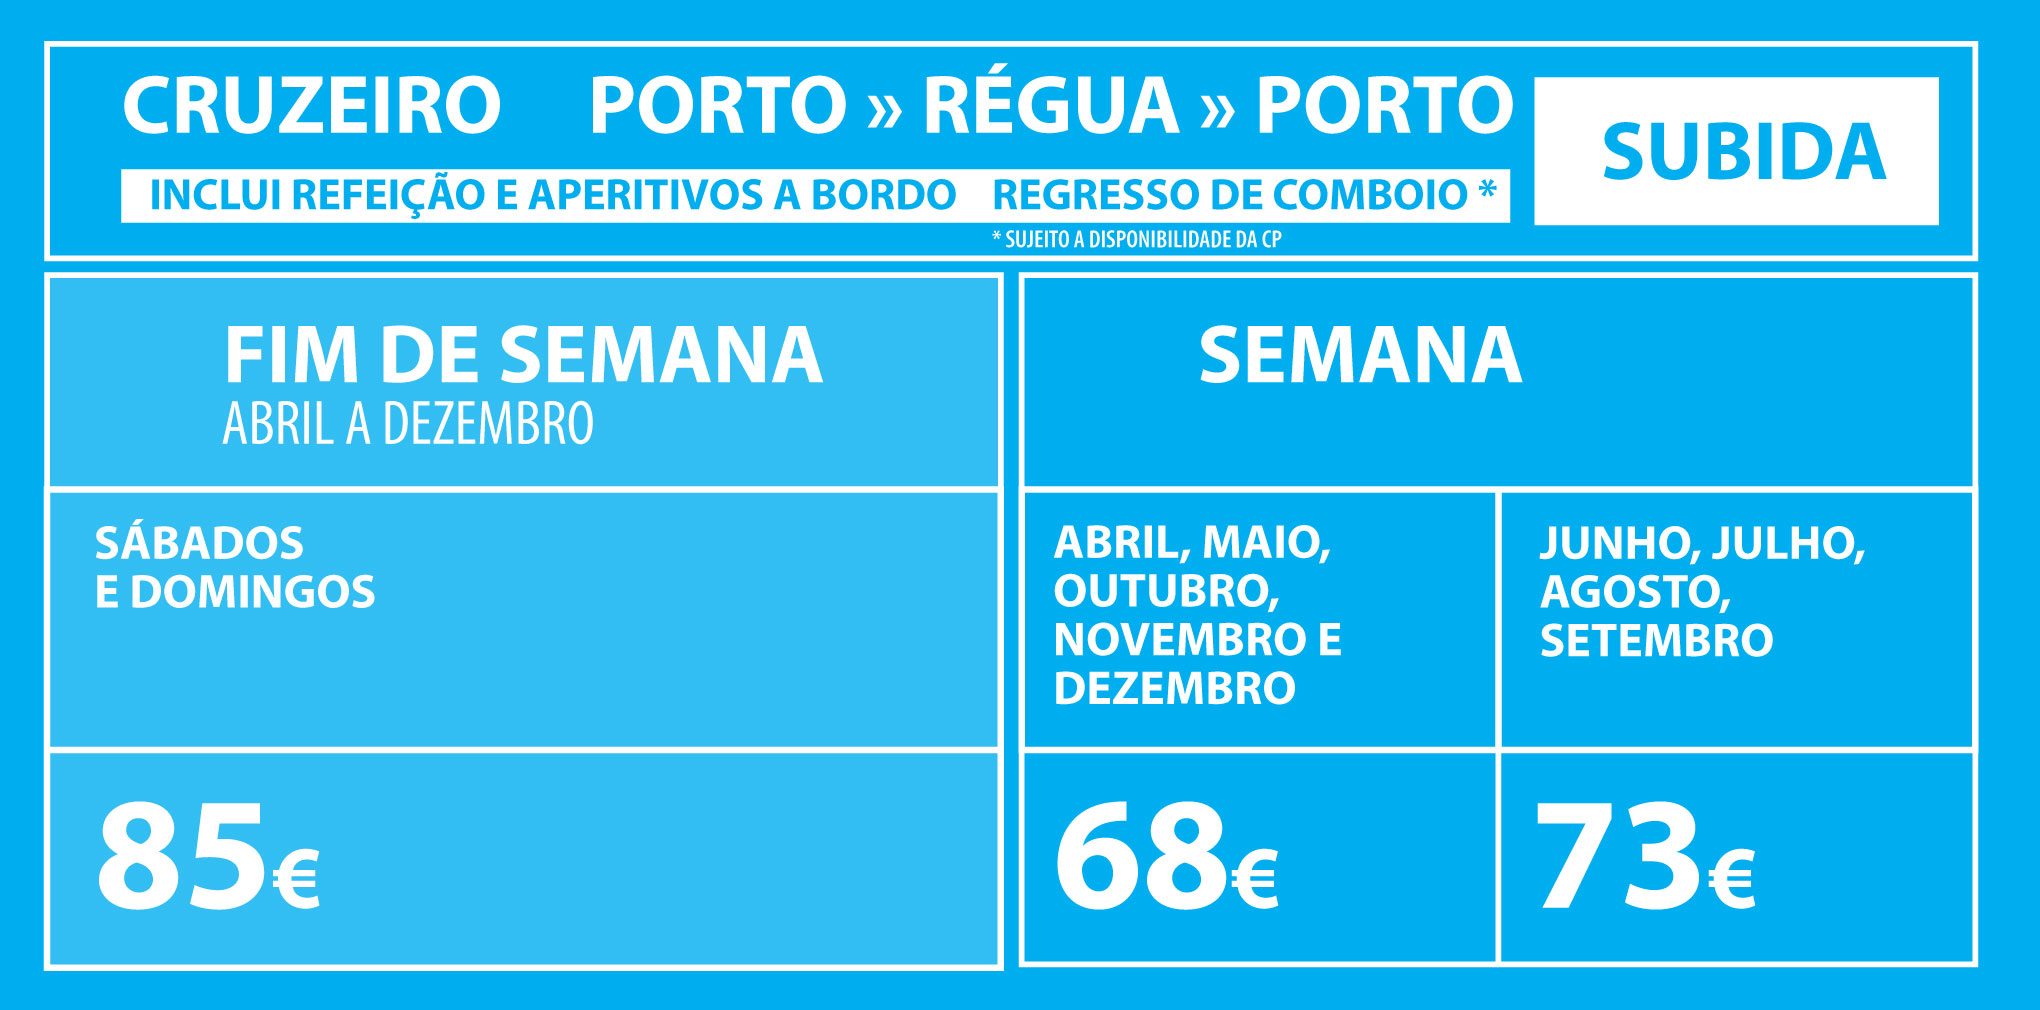 Cruzeiro no Douro - Porto Régua Porto